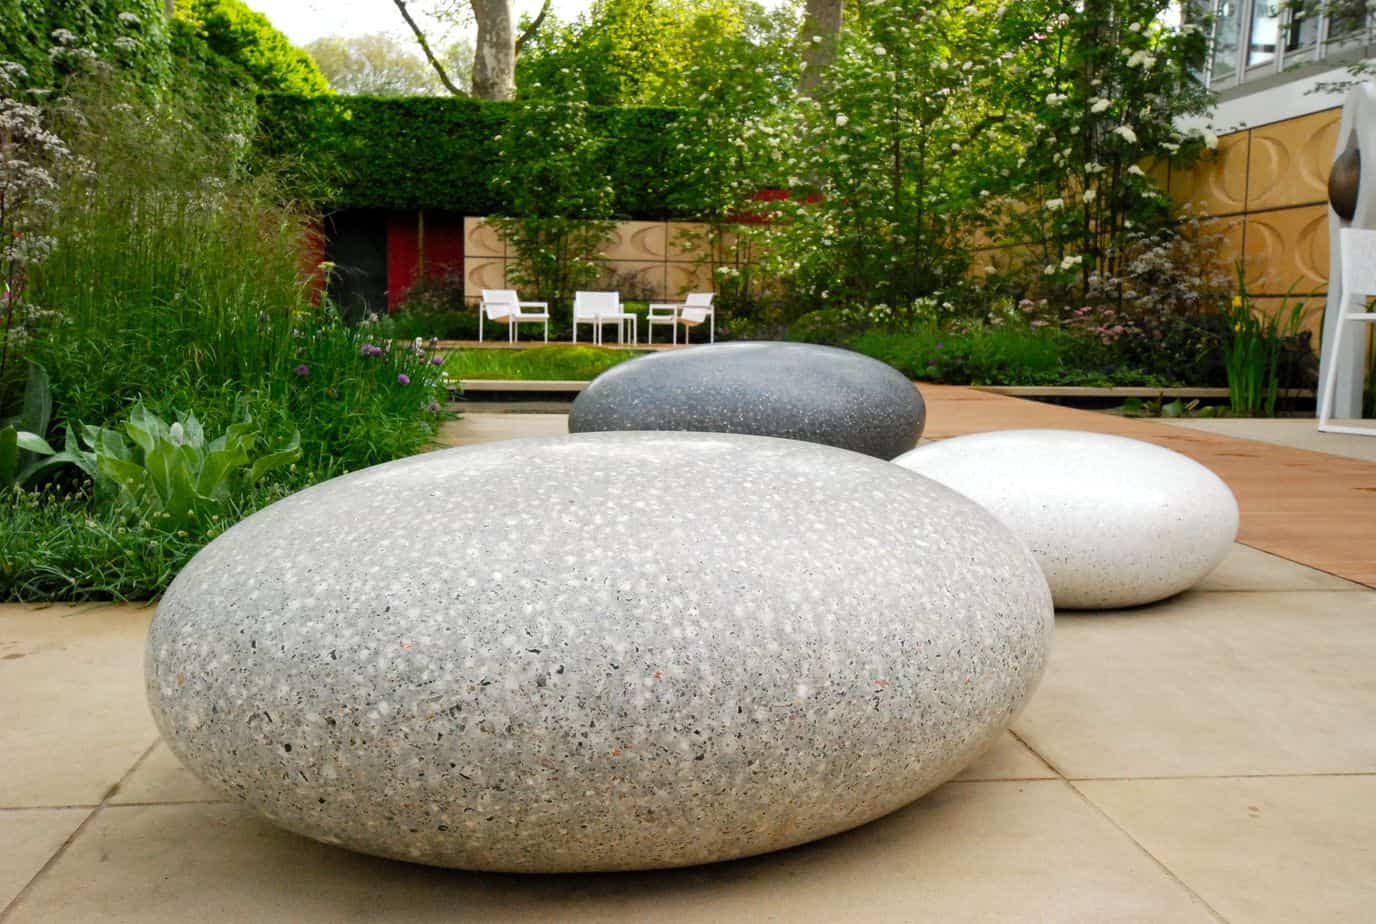 Stone pebble garden bench in oval shape